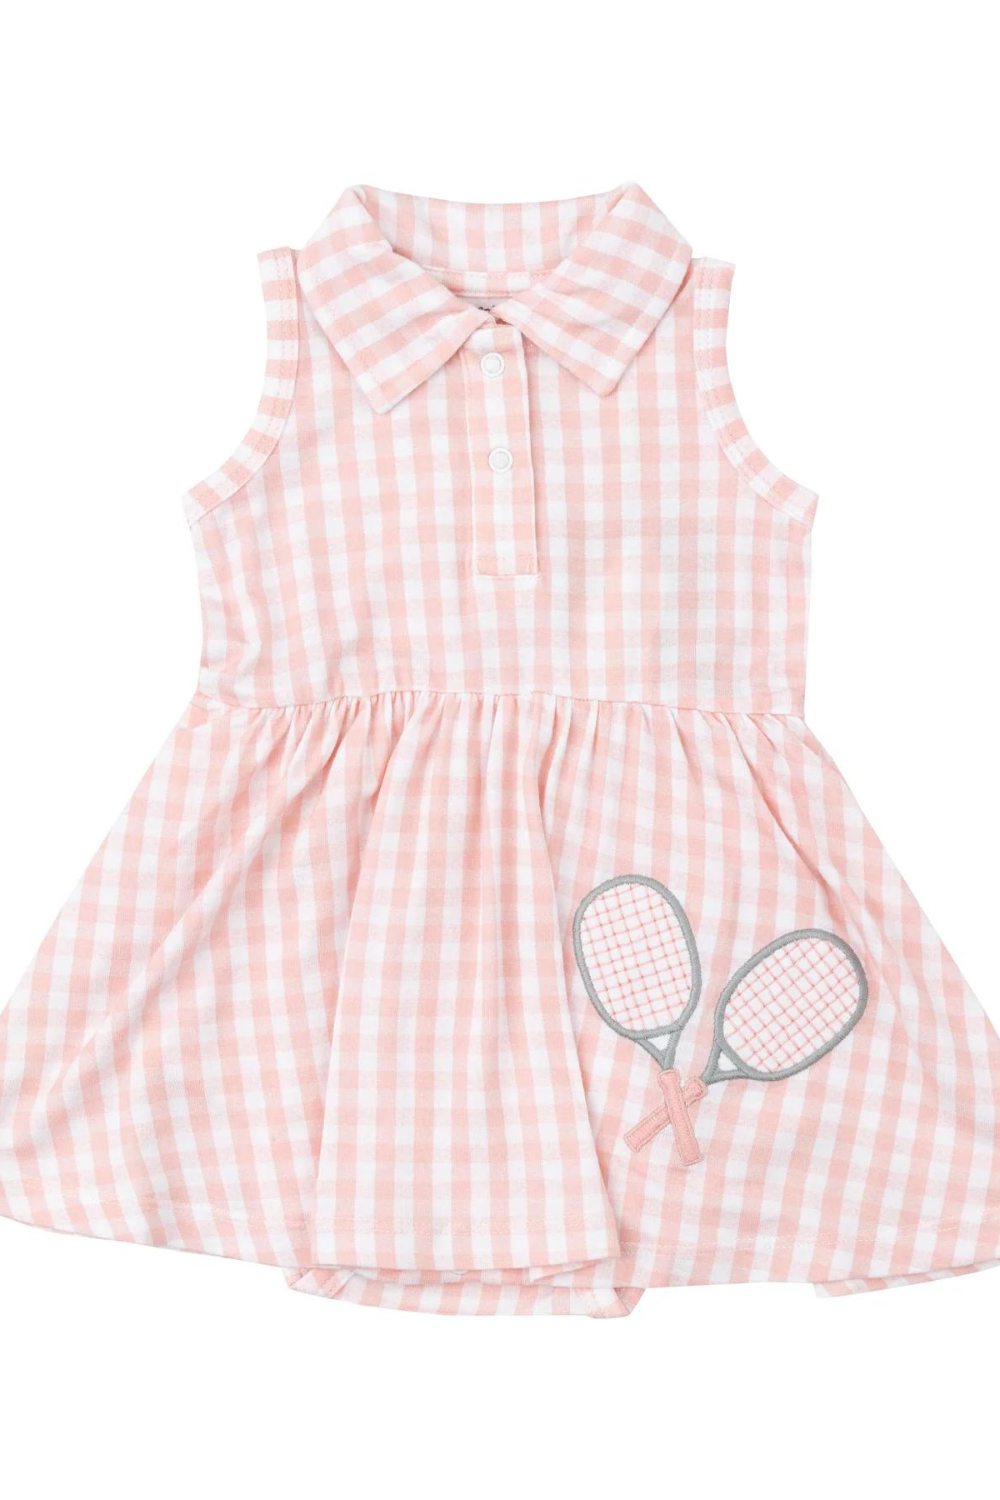 Angel Dear Tennis Tank Bodysuit Dress- Mini Pink Gingham